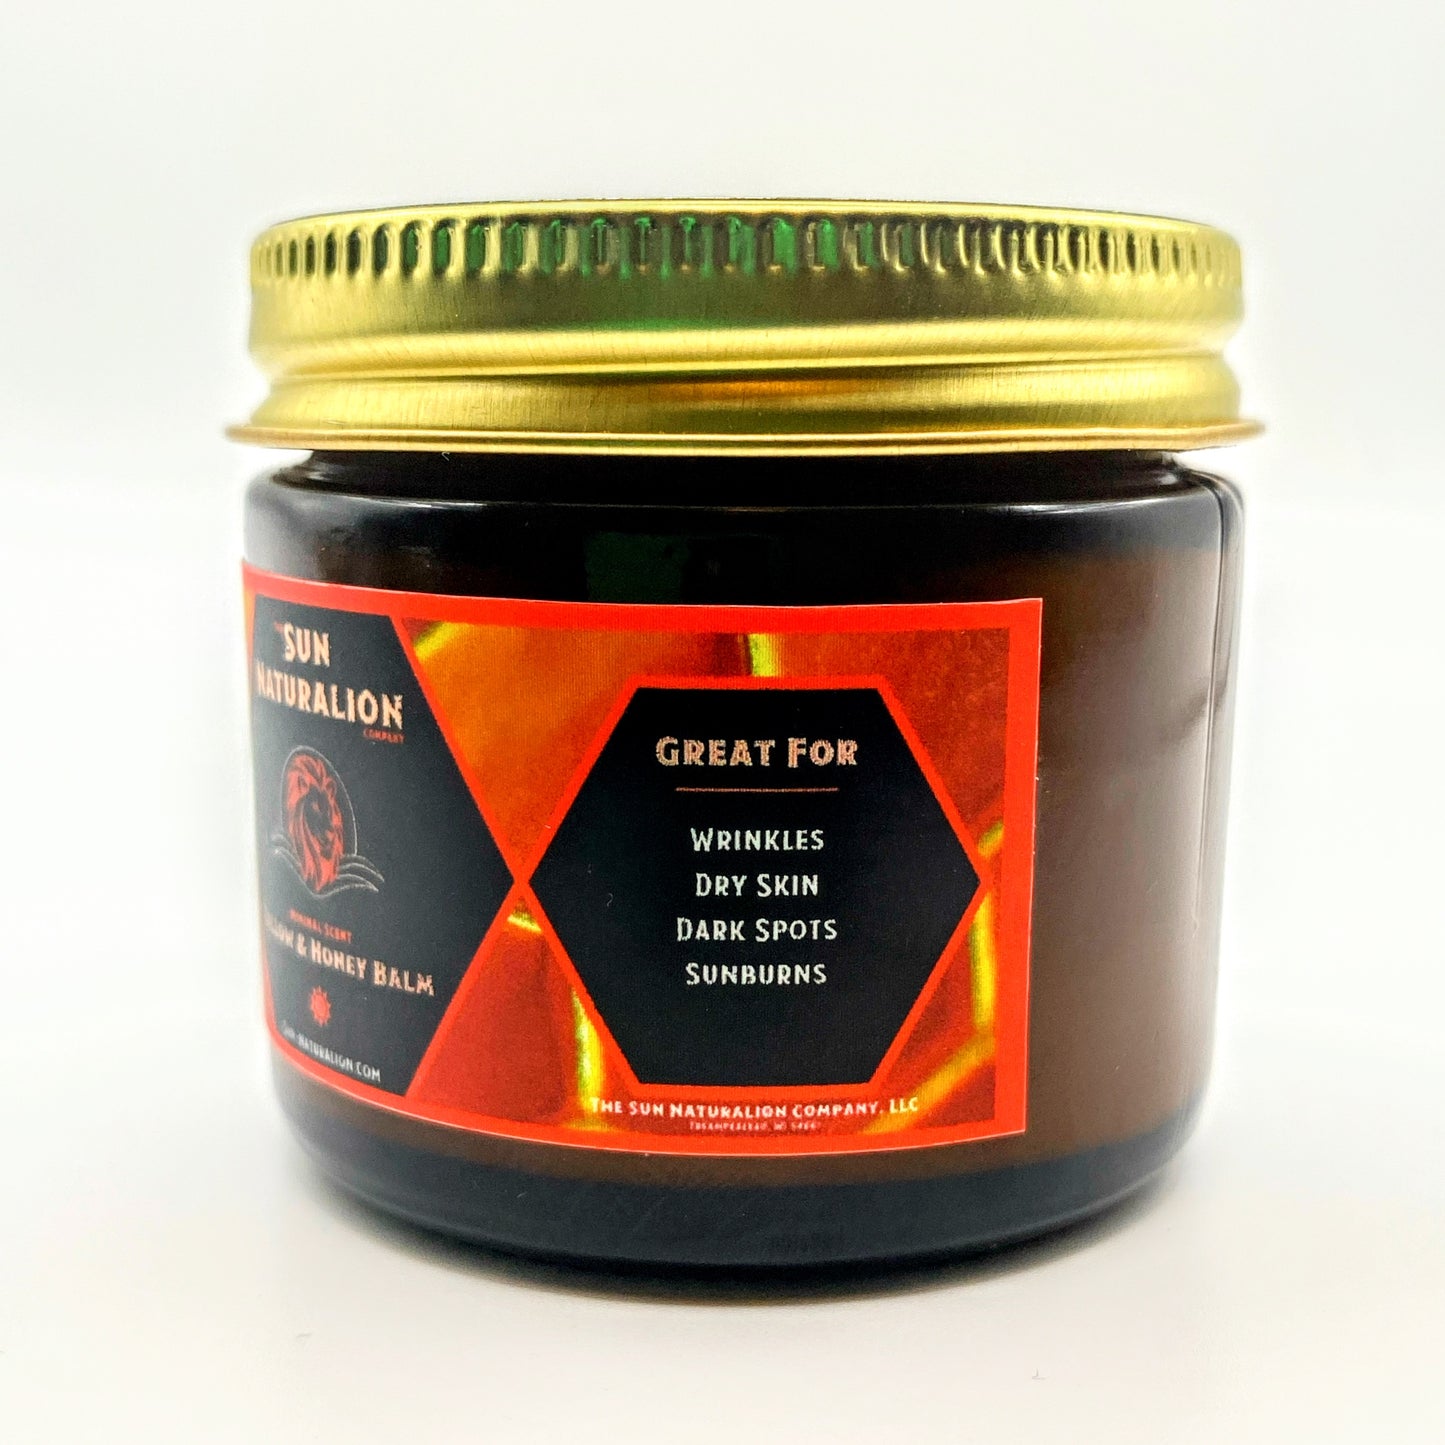 Tallow & Honey Balm - Minimal Scent (2 oz Jar)